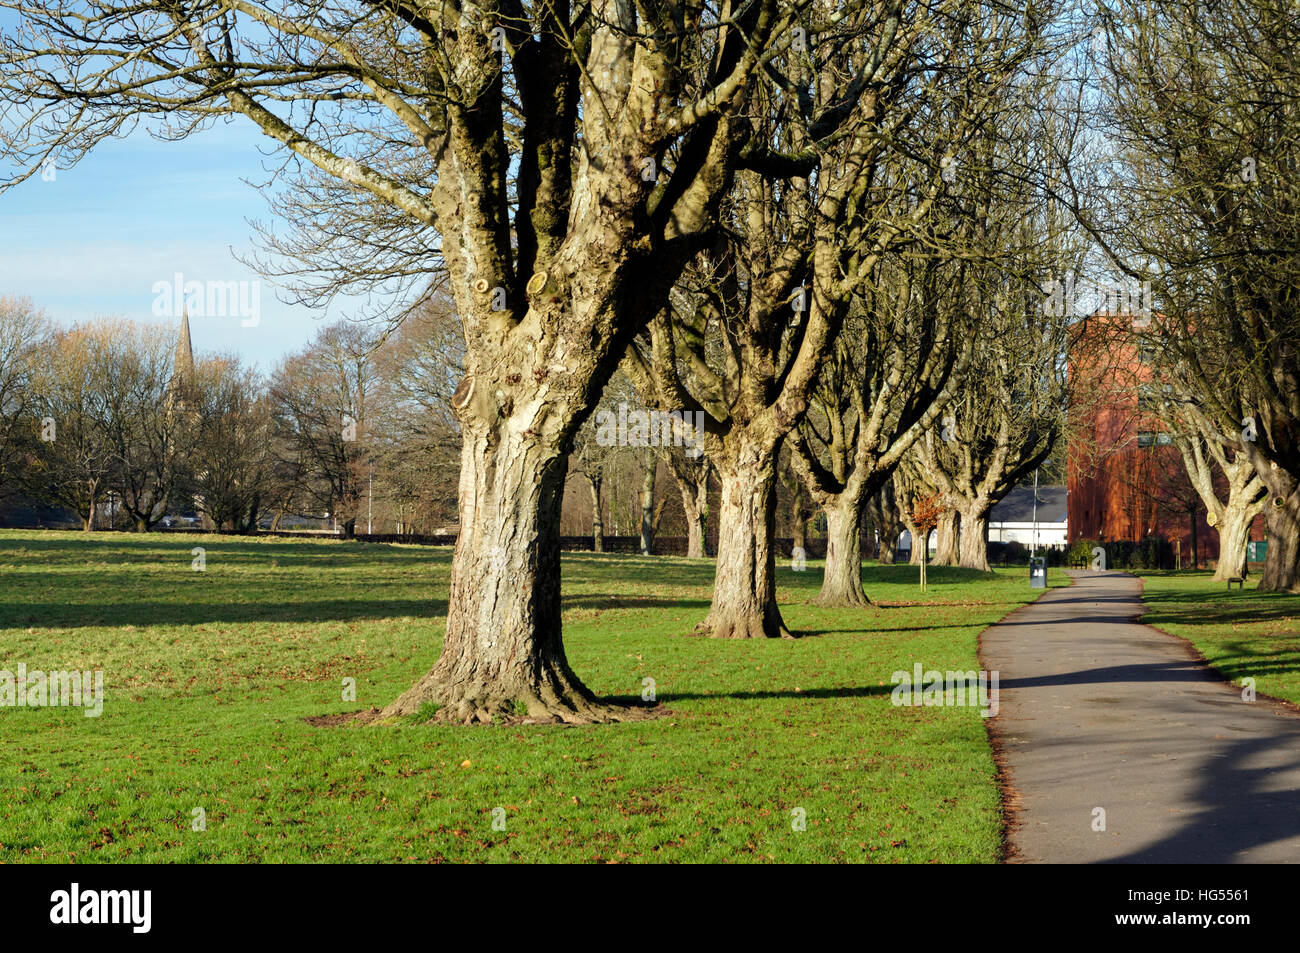 Avenue of Horse Chestnut trees, Llandaff Fields, Cardiff, Wales. Stock Photo